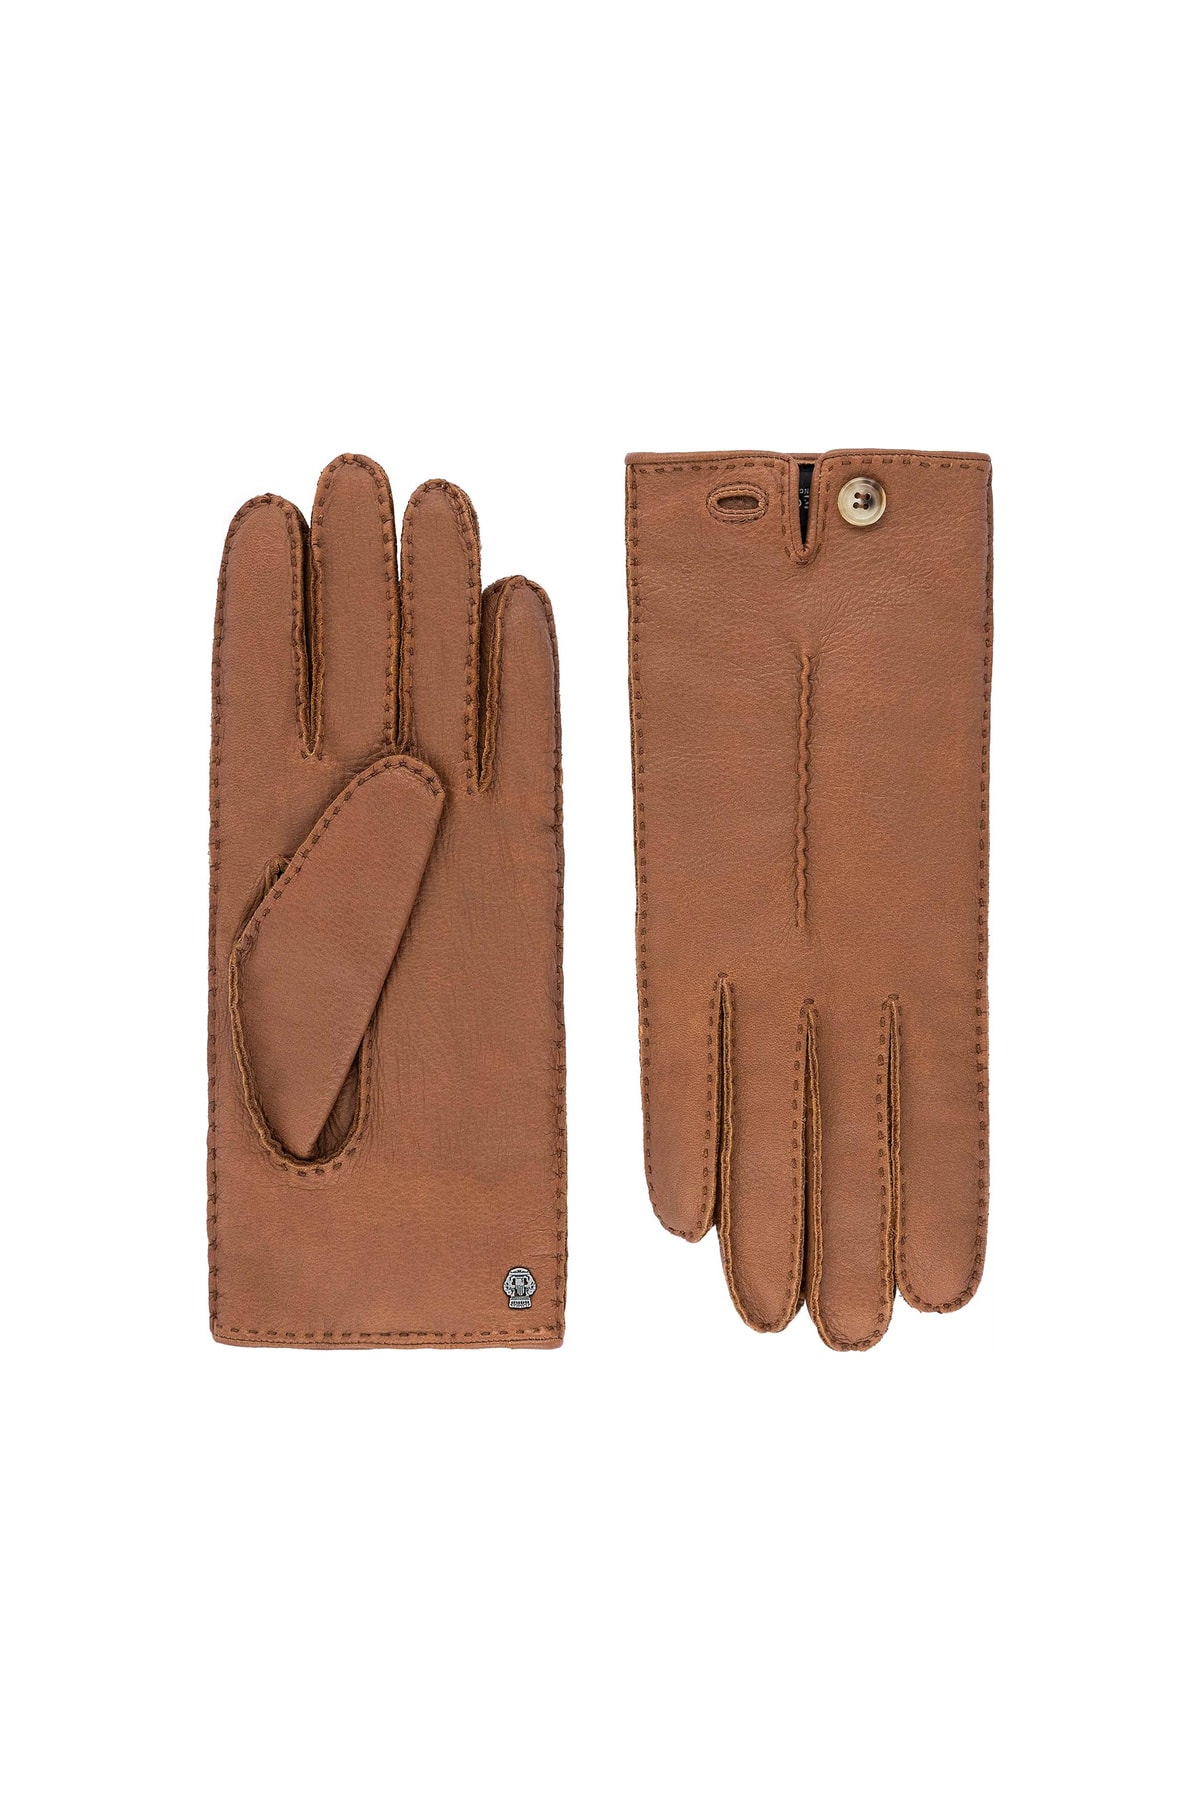 Roeckl Handschuhe Braun Casual Fast ausverkauft